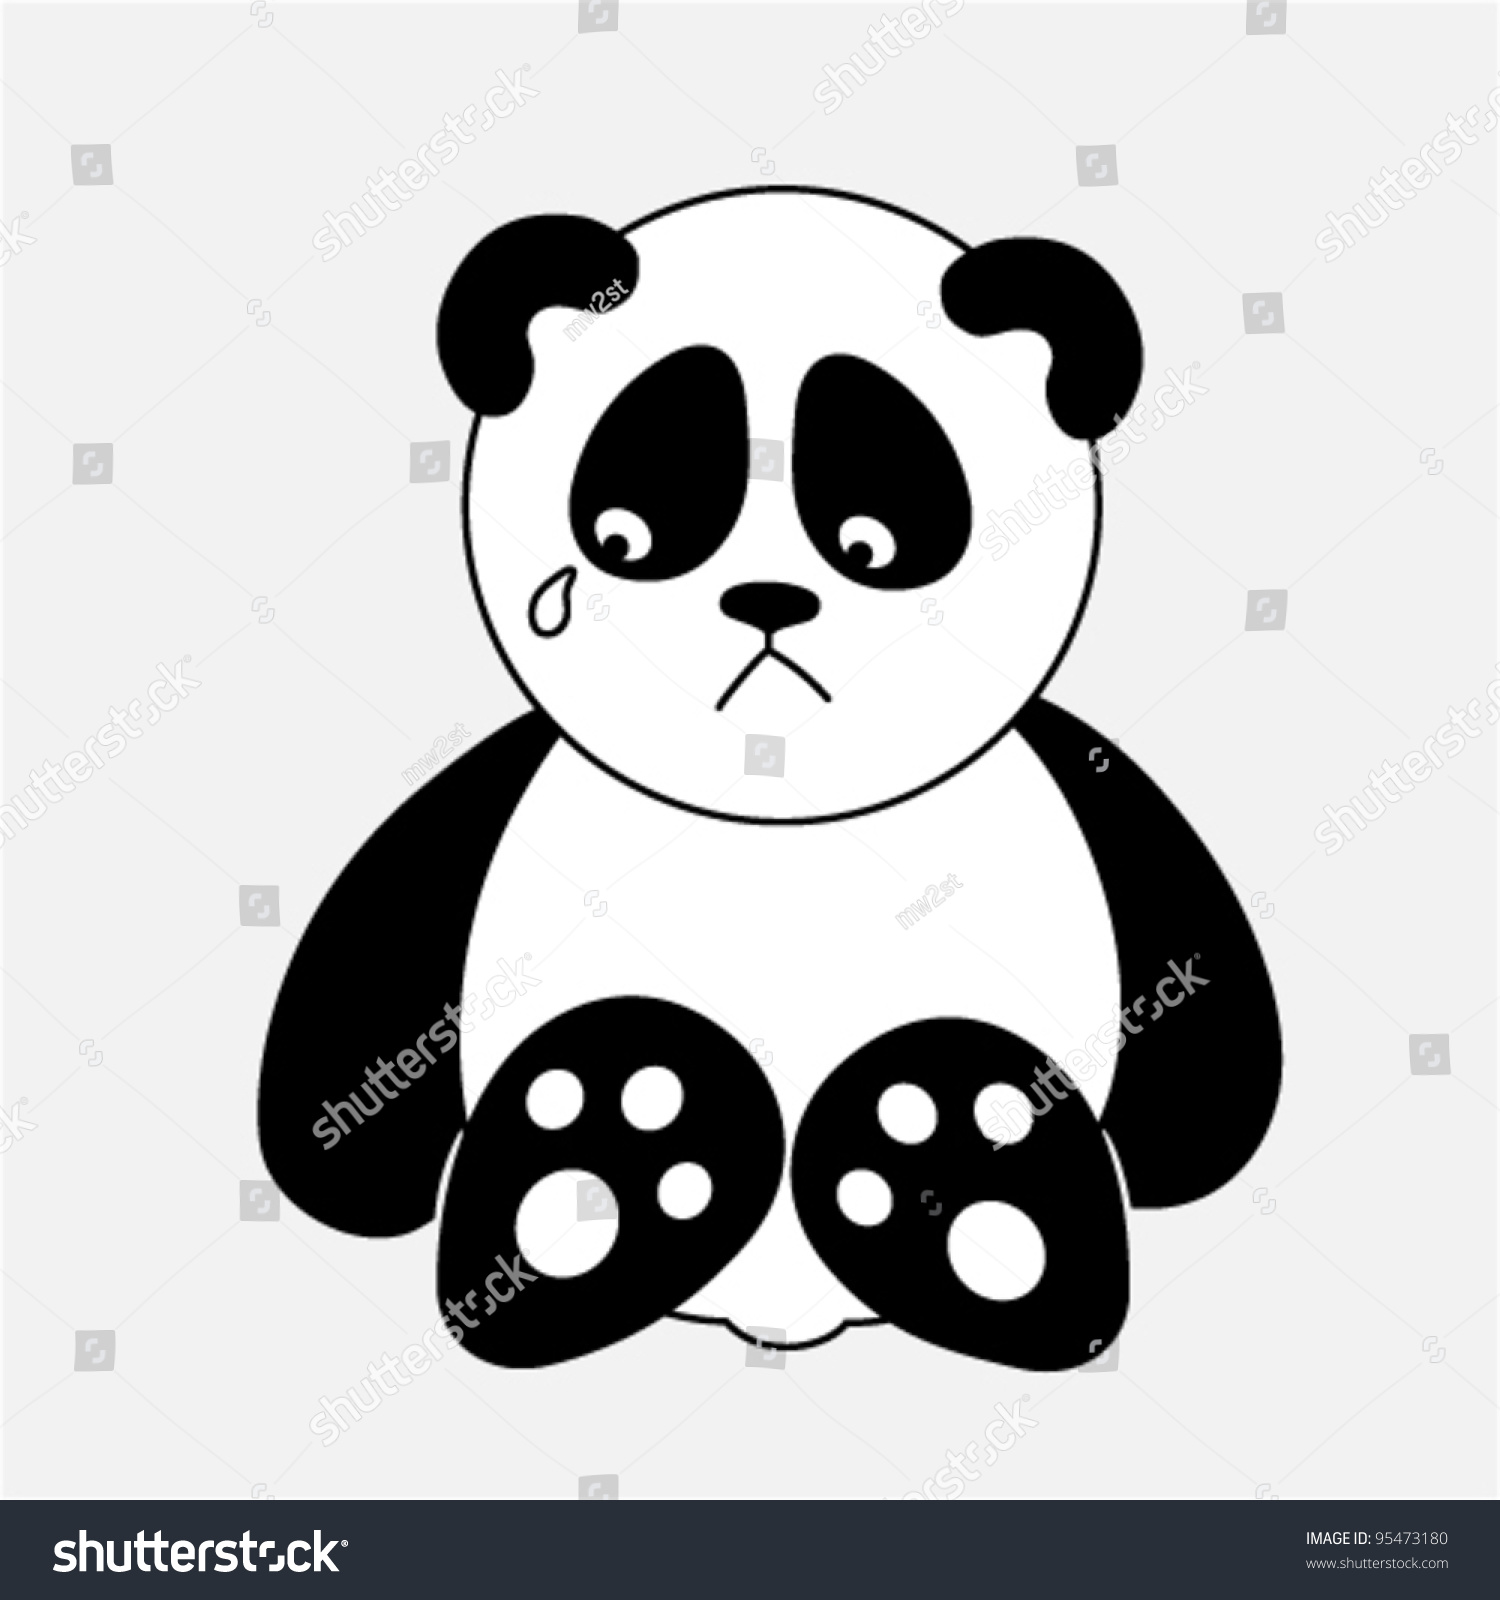 clipart panda sad face - photo #37